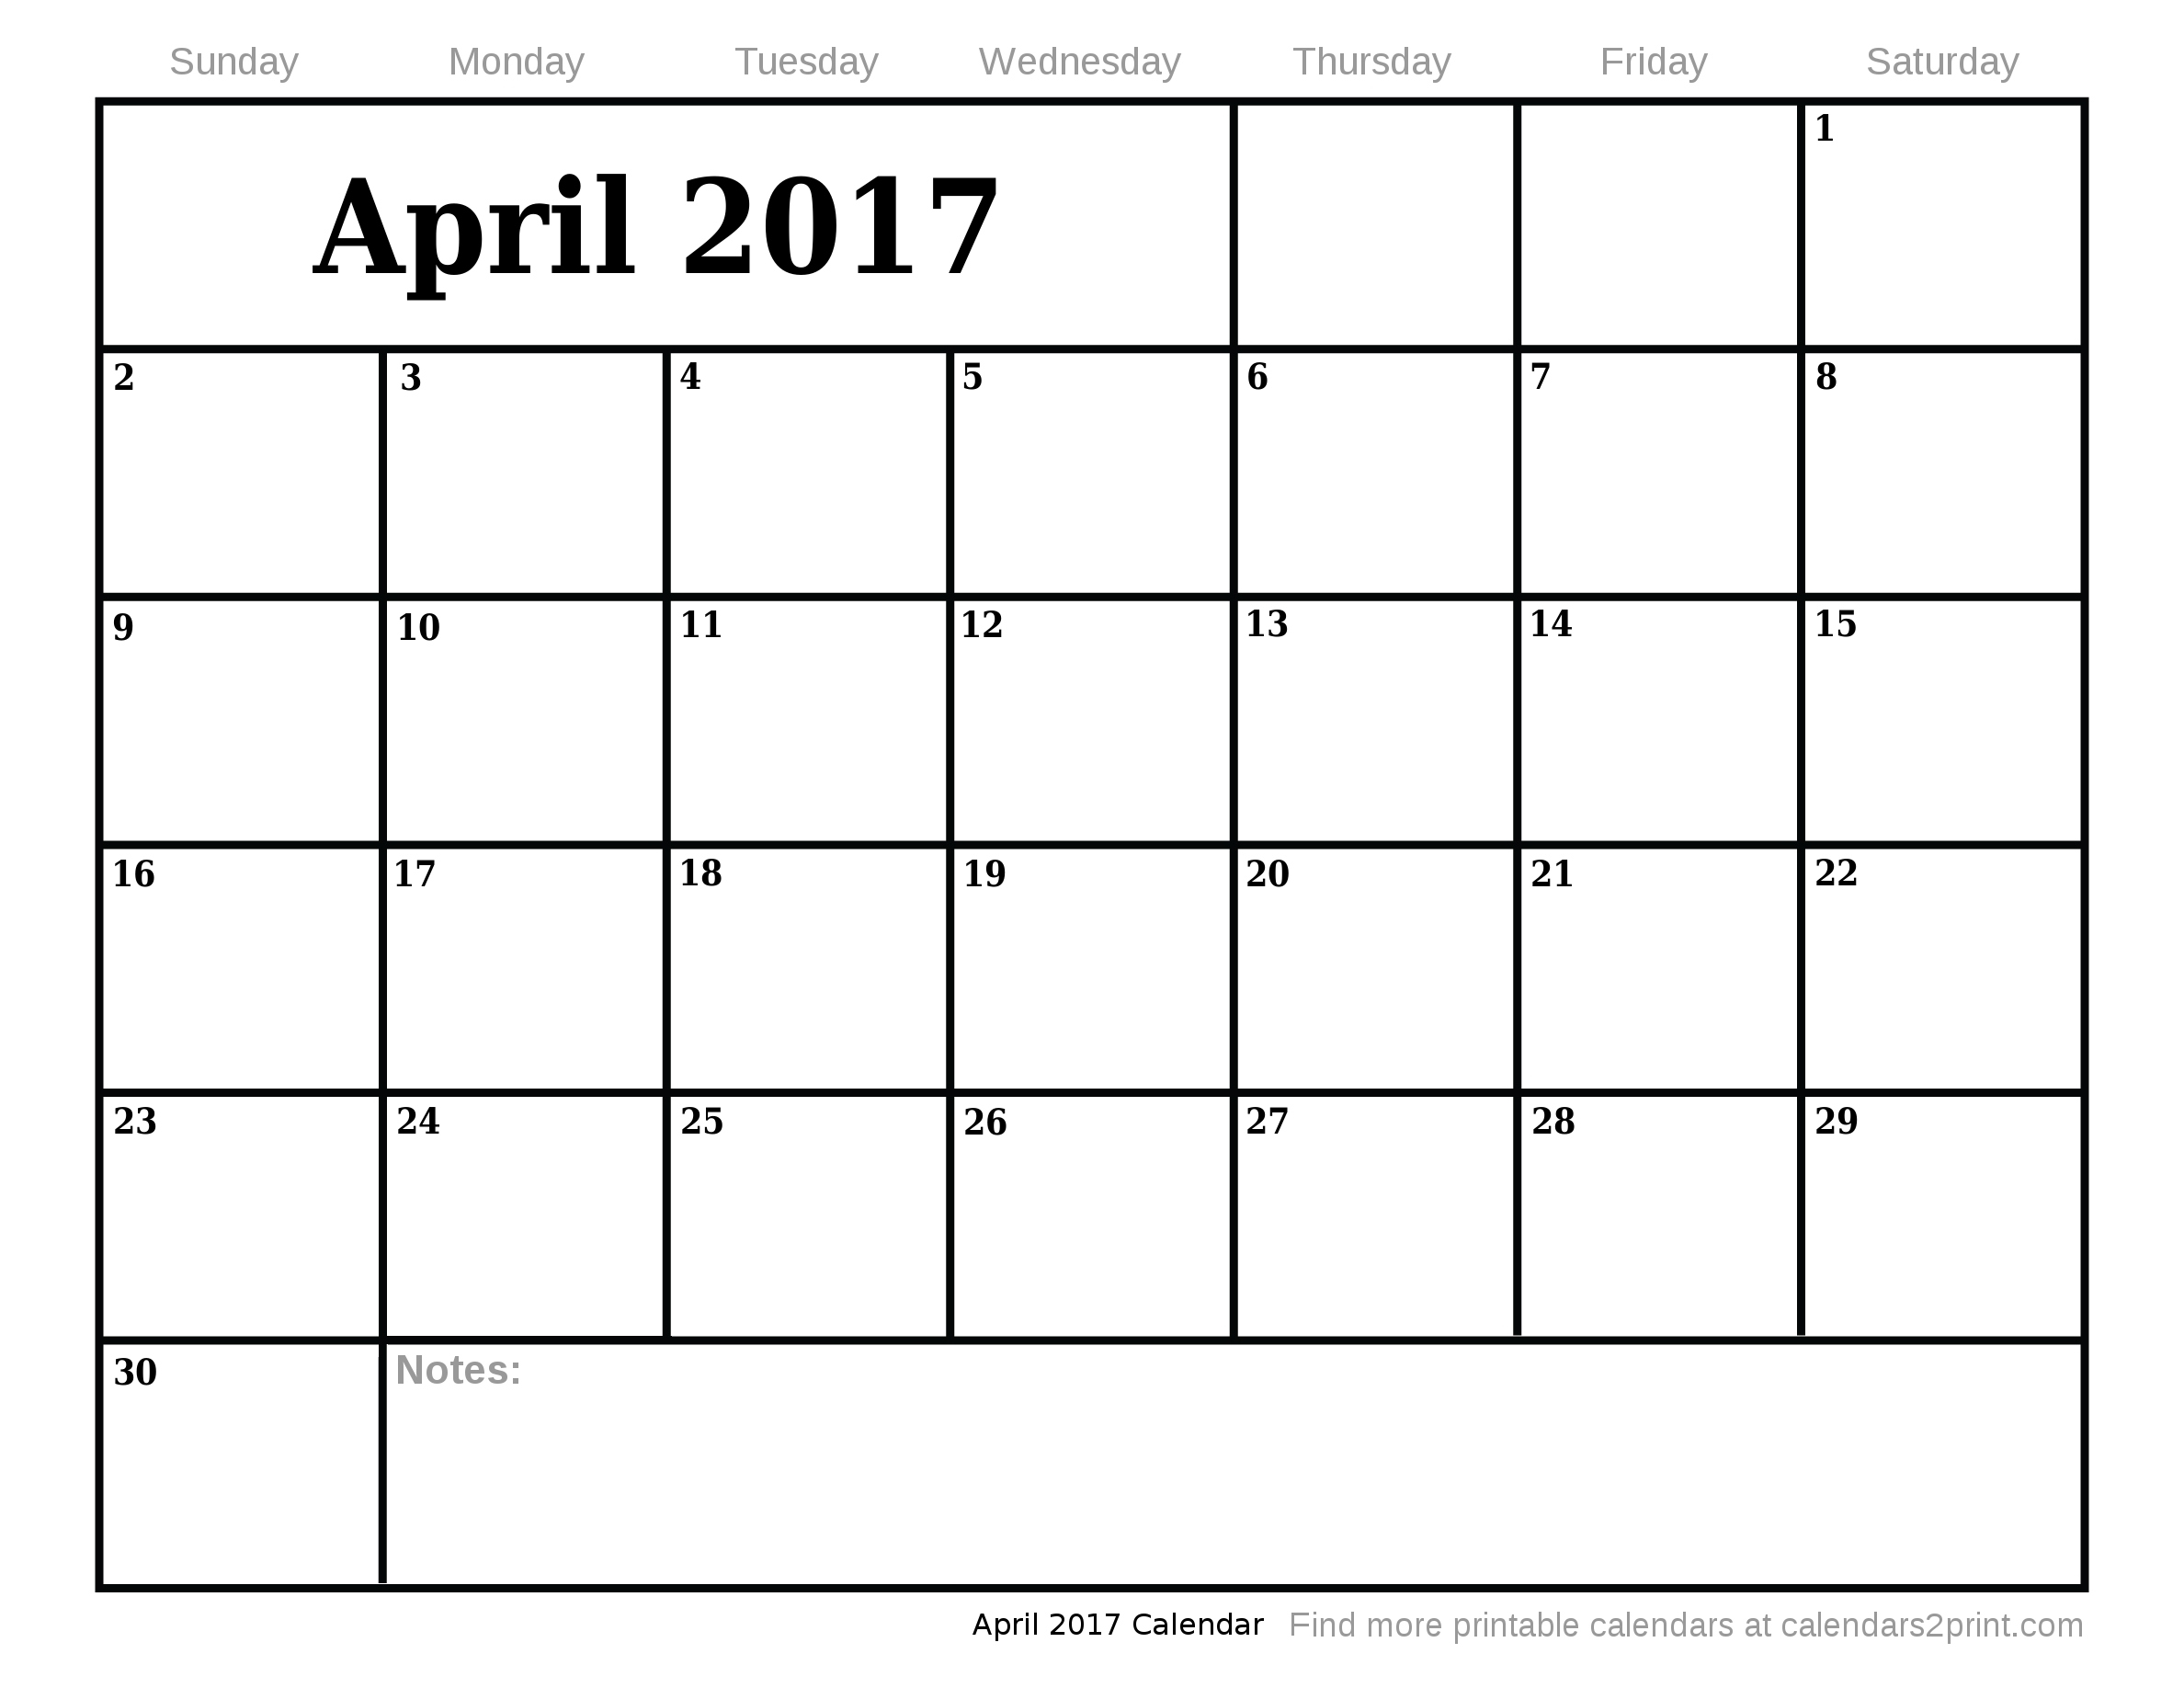 Apr 2017 Printable Calendar